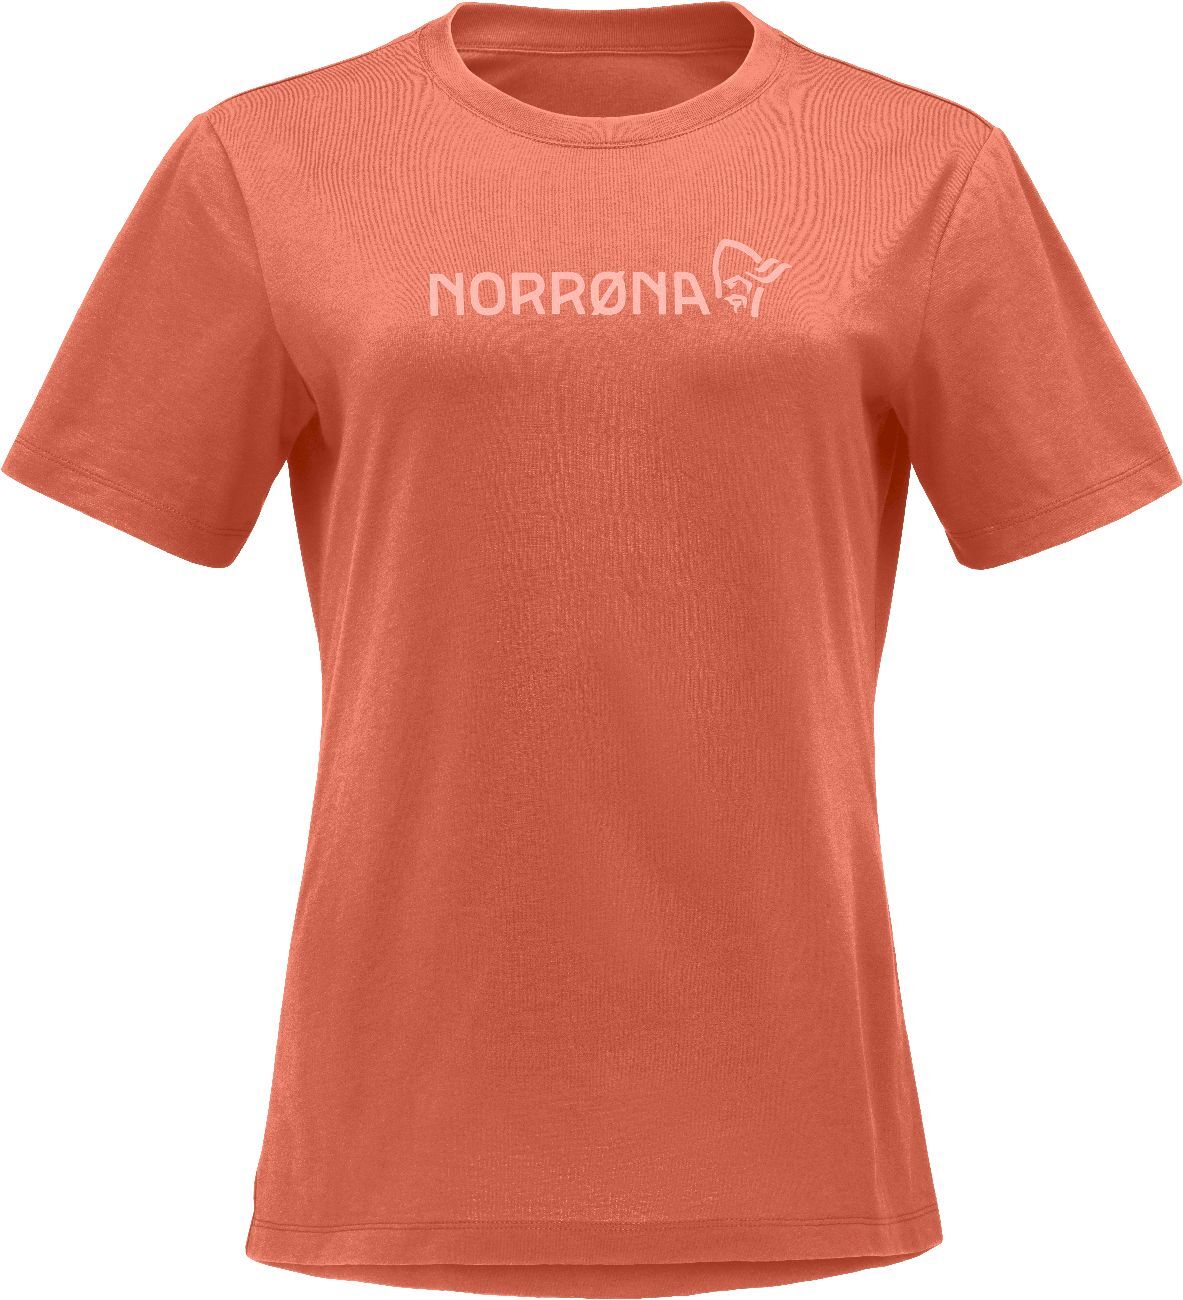 Norrona /29 Cotton Norrona Viking - T-shirt - Donna